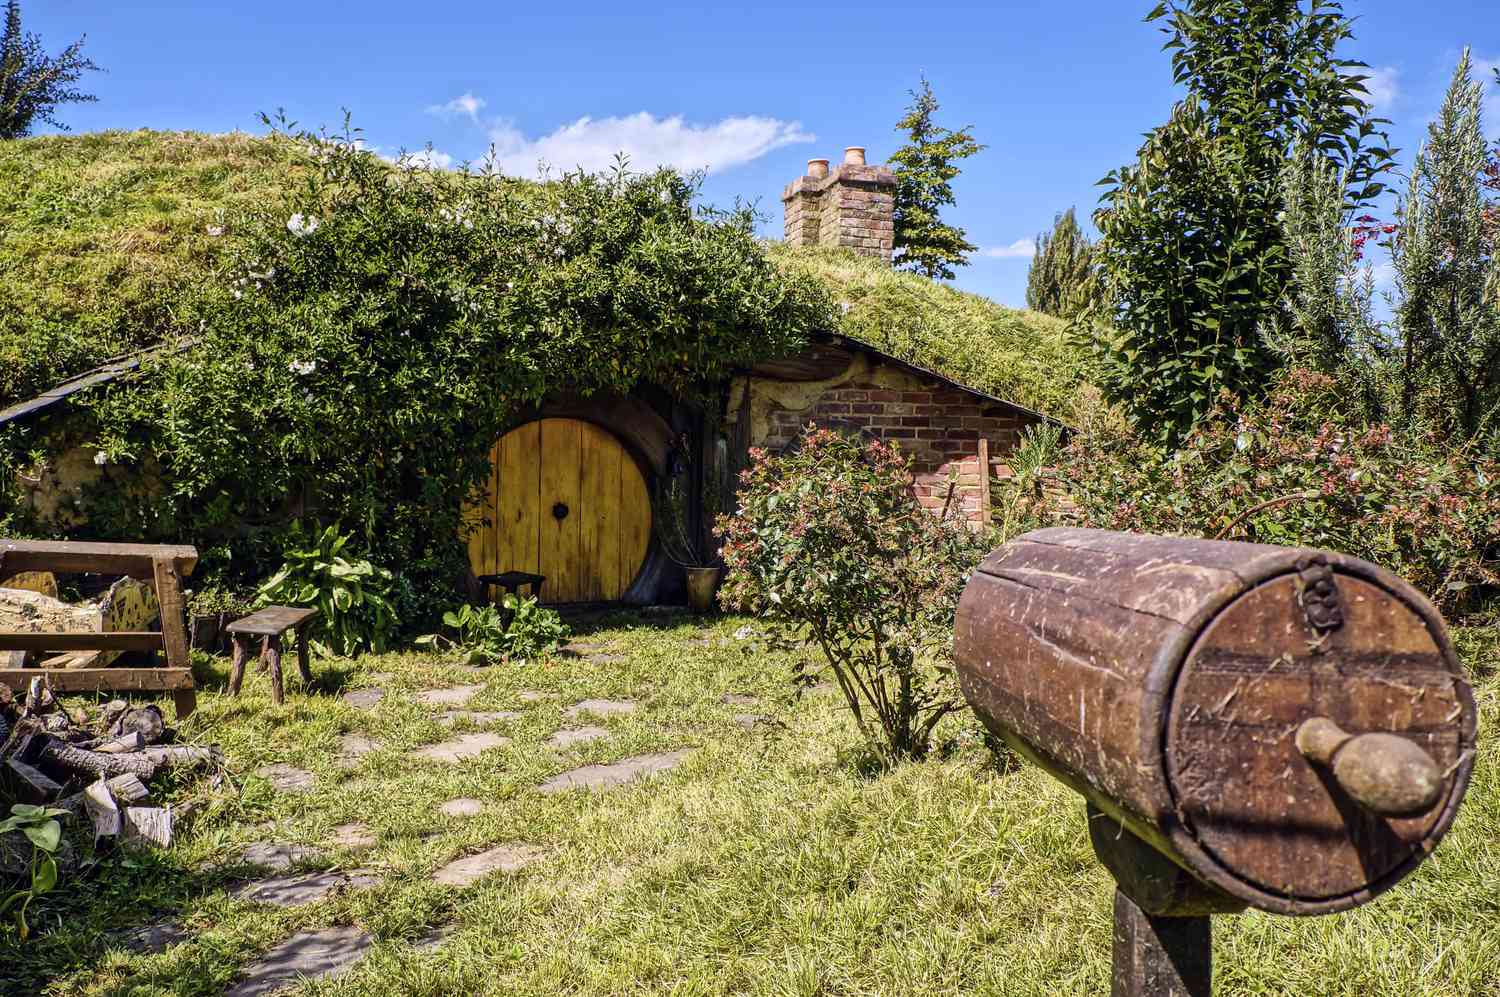 A Hobbit-style tiny home